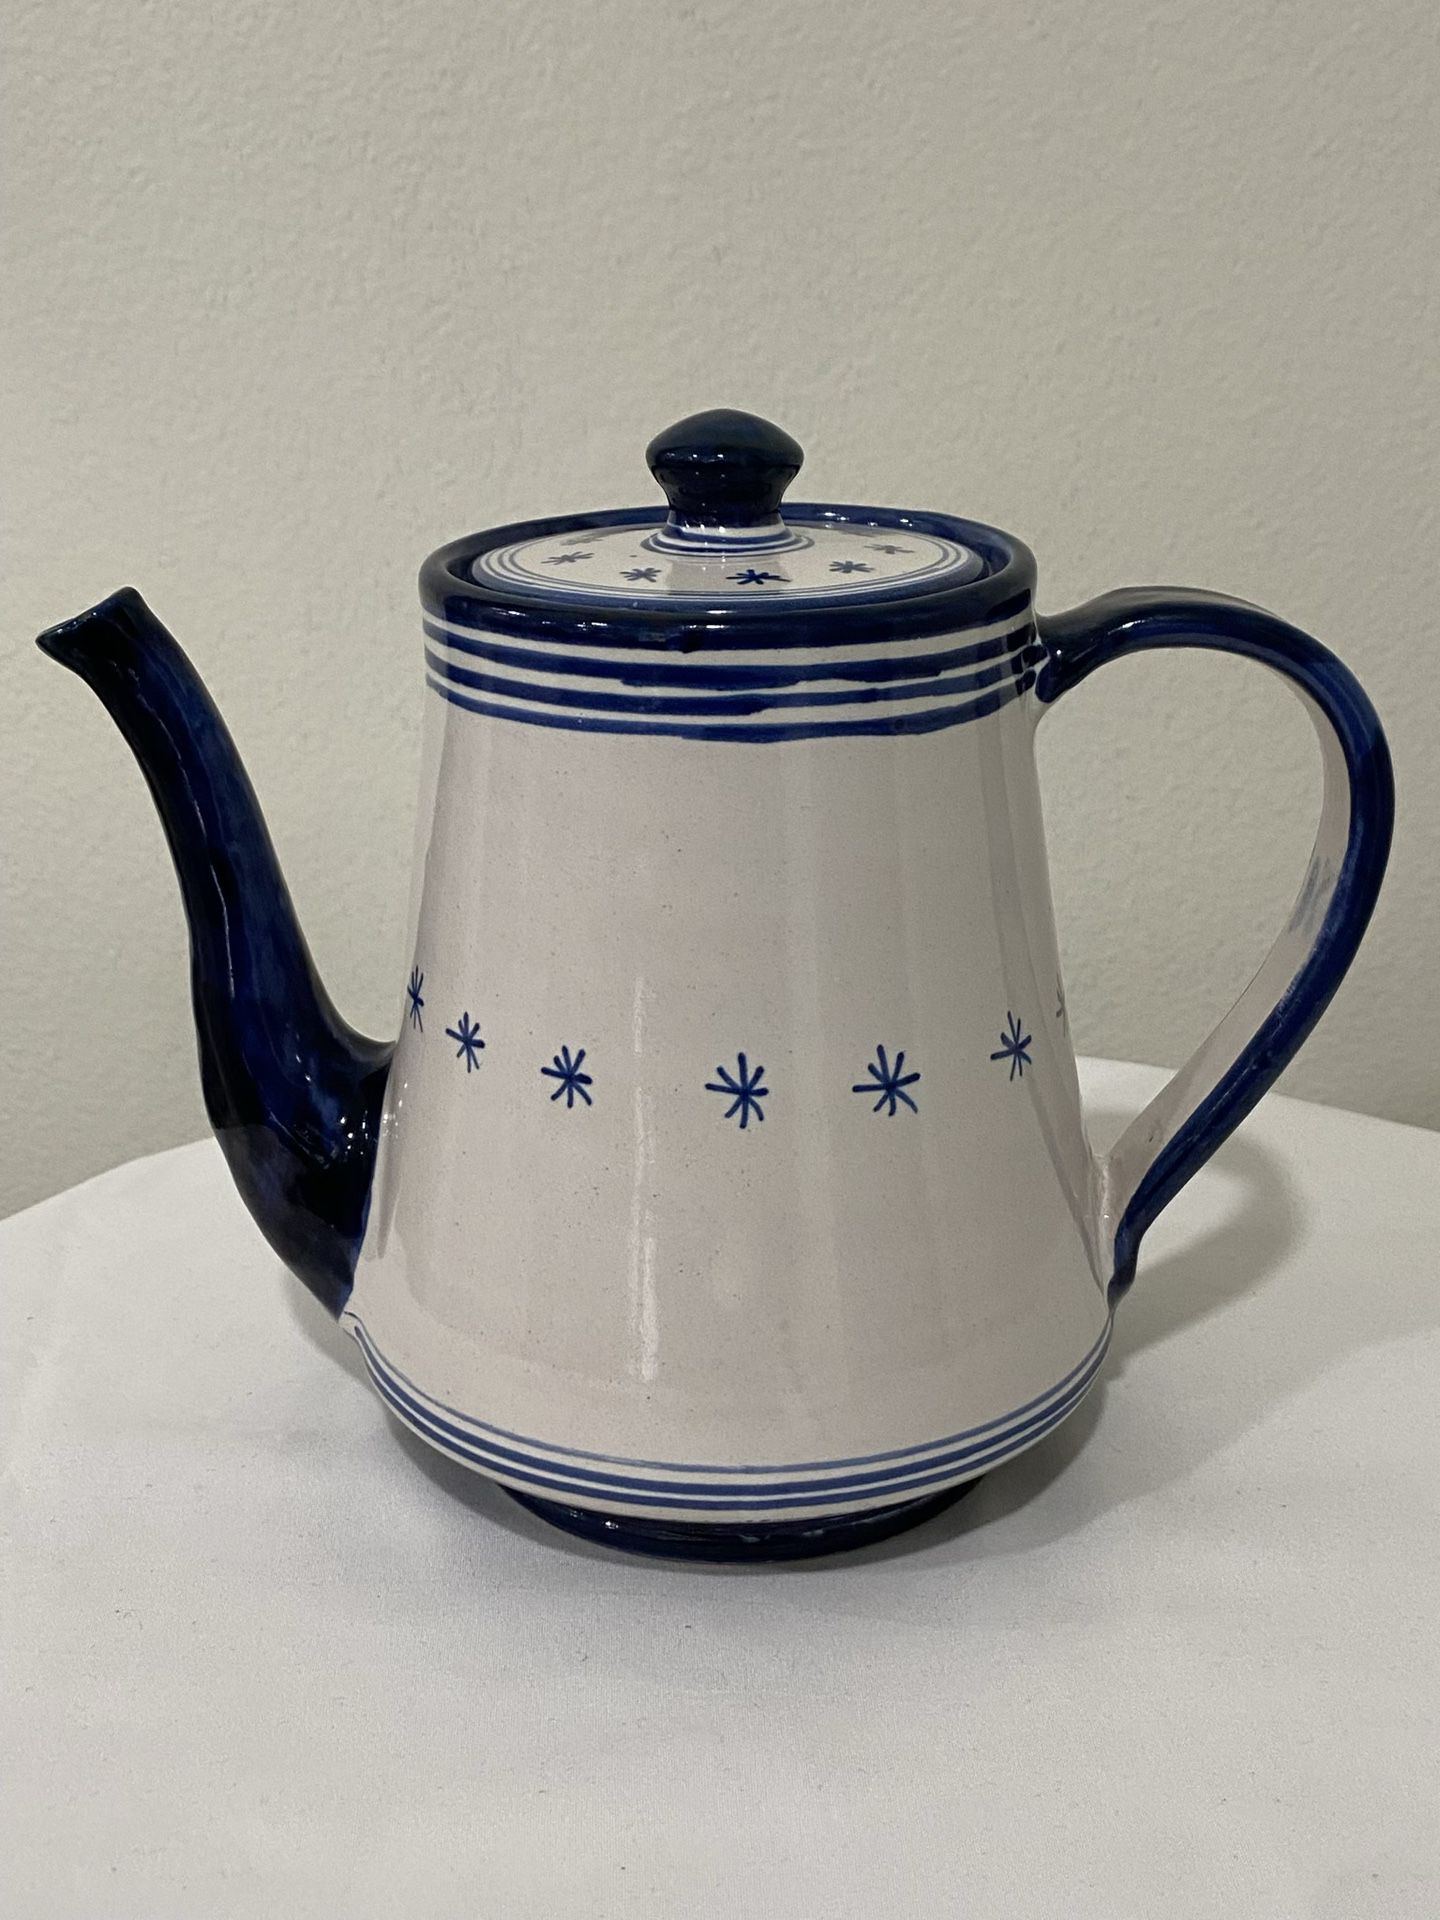 Vintage Rifa Vietri Italian Artisan Handcrafted And Painted Blue and White Glazed Ceramic Coffee/Tea Pot